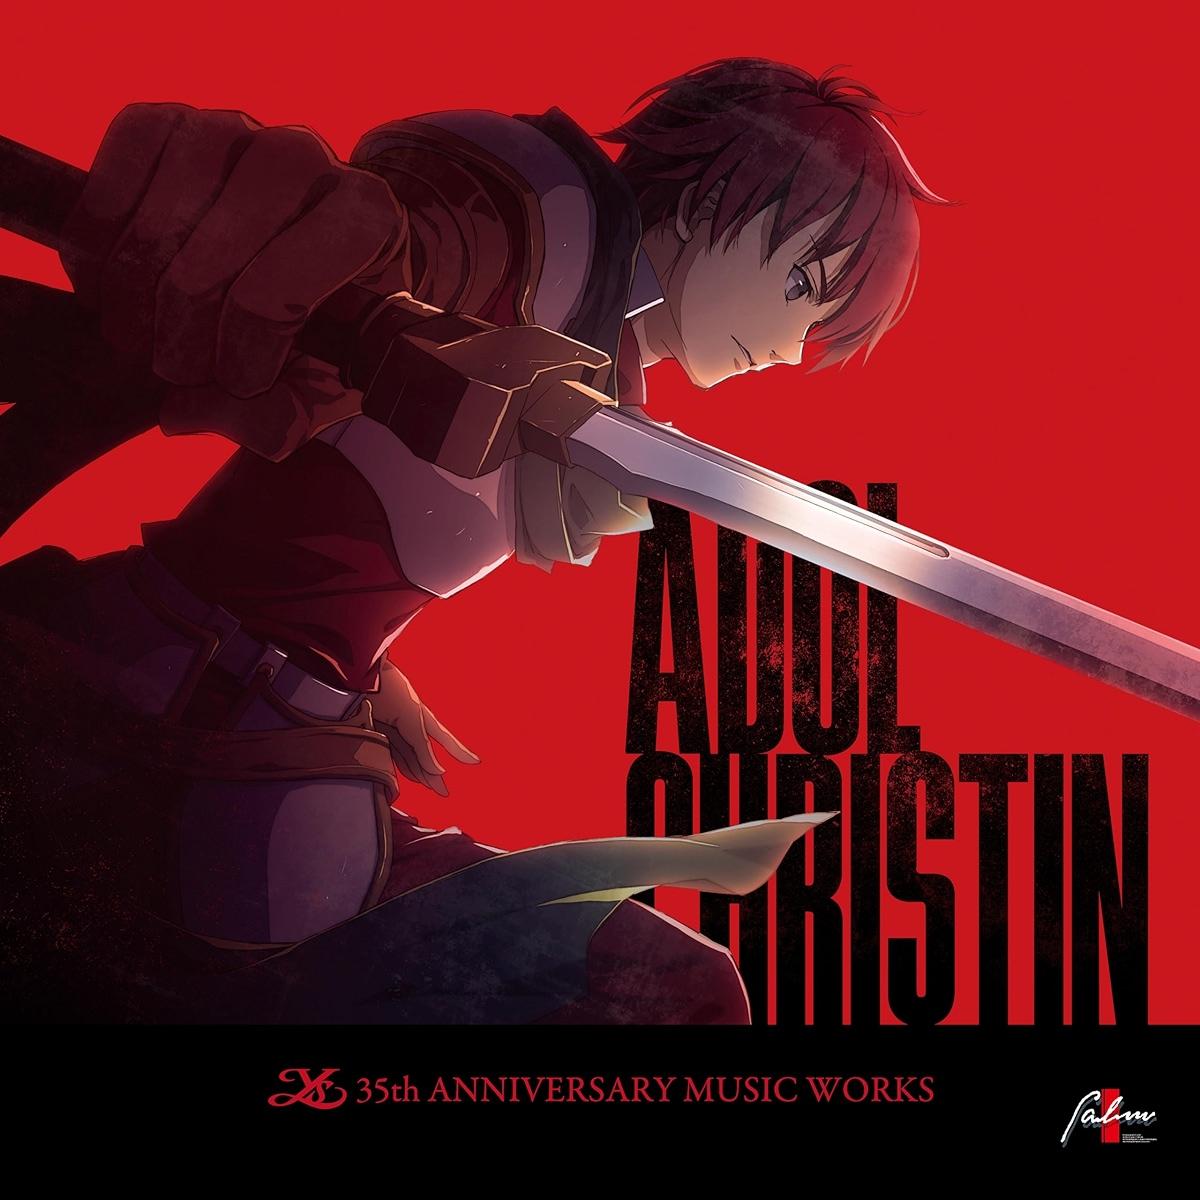 Ys 35th Anniversary Music Works - Adol Christin